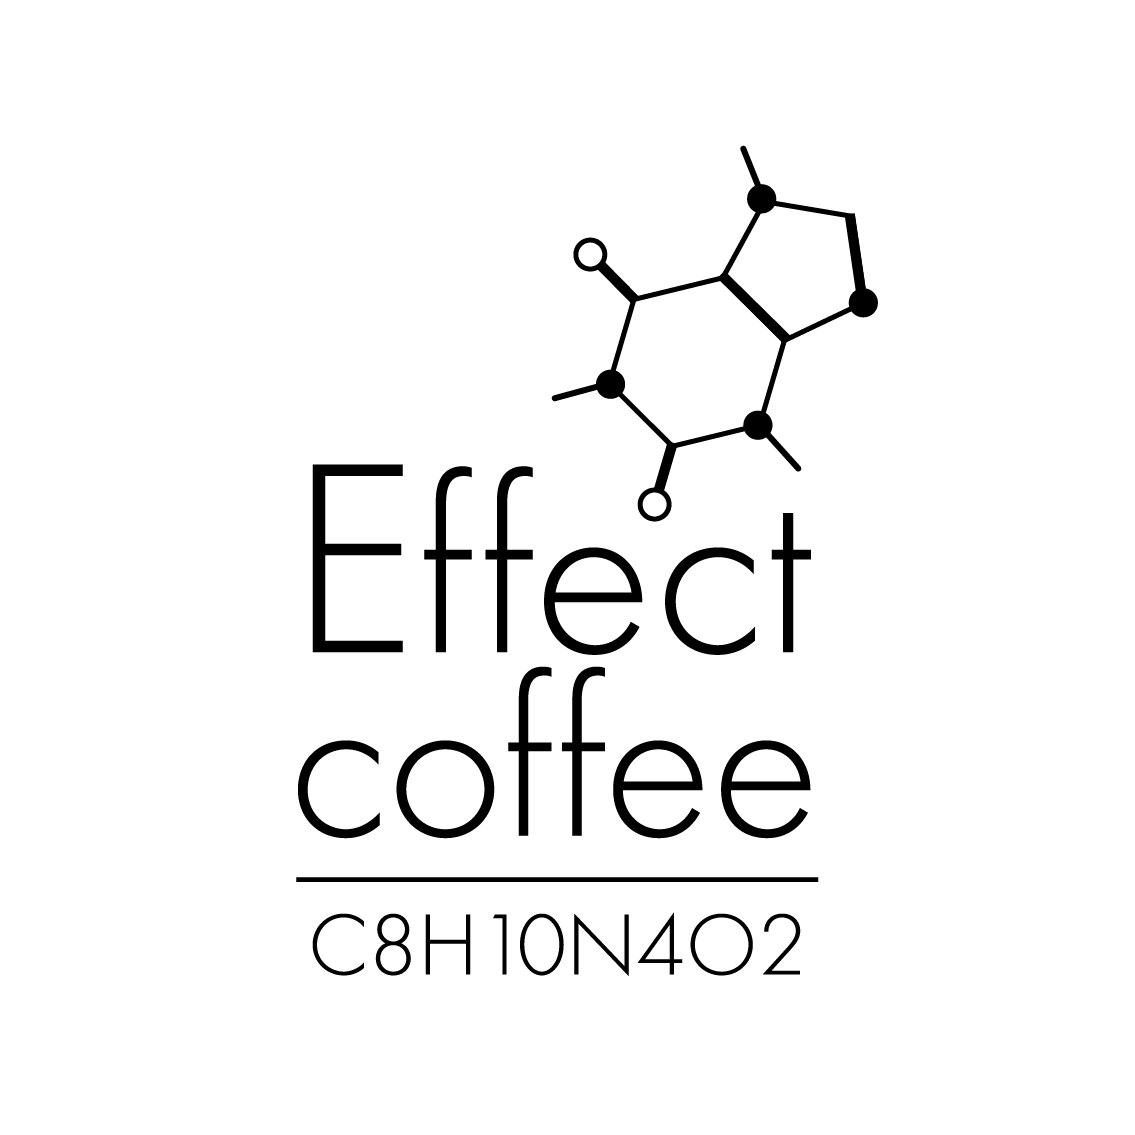 Effect coffee